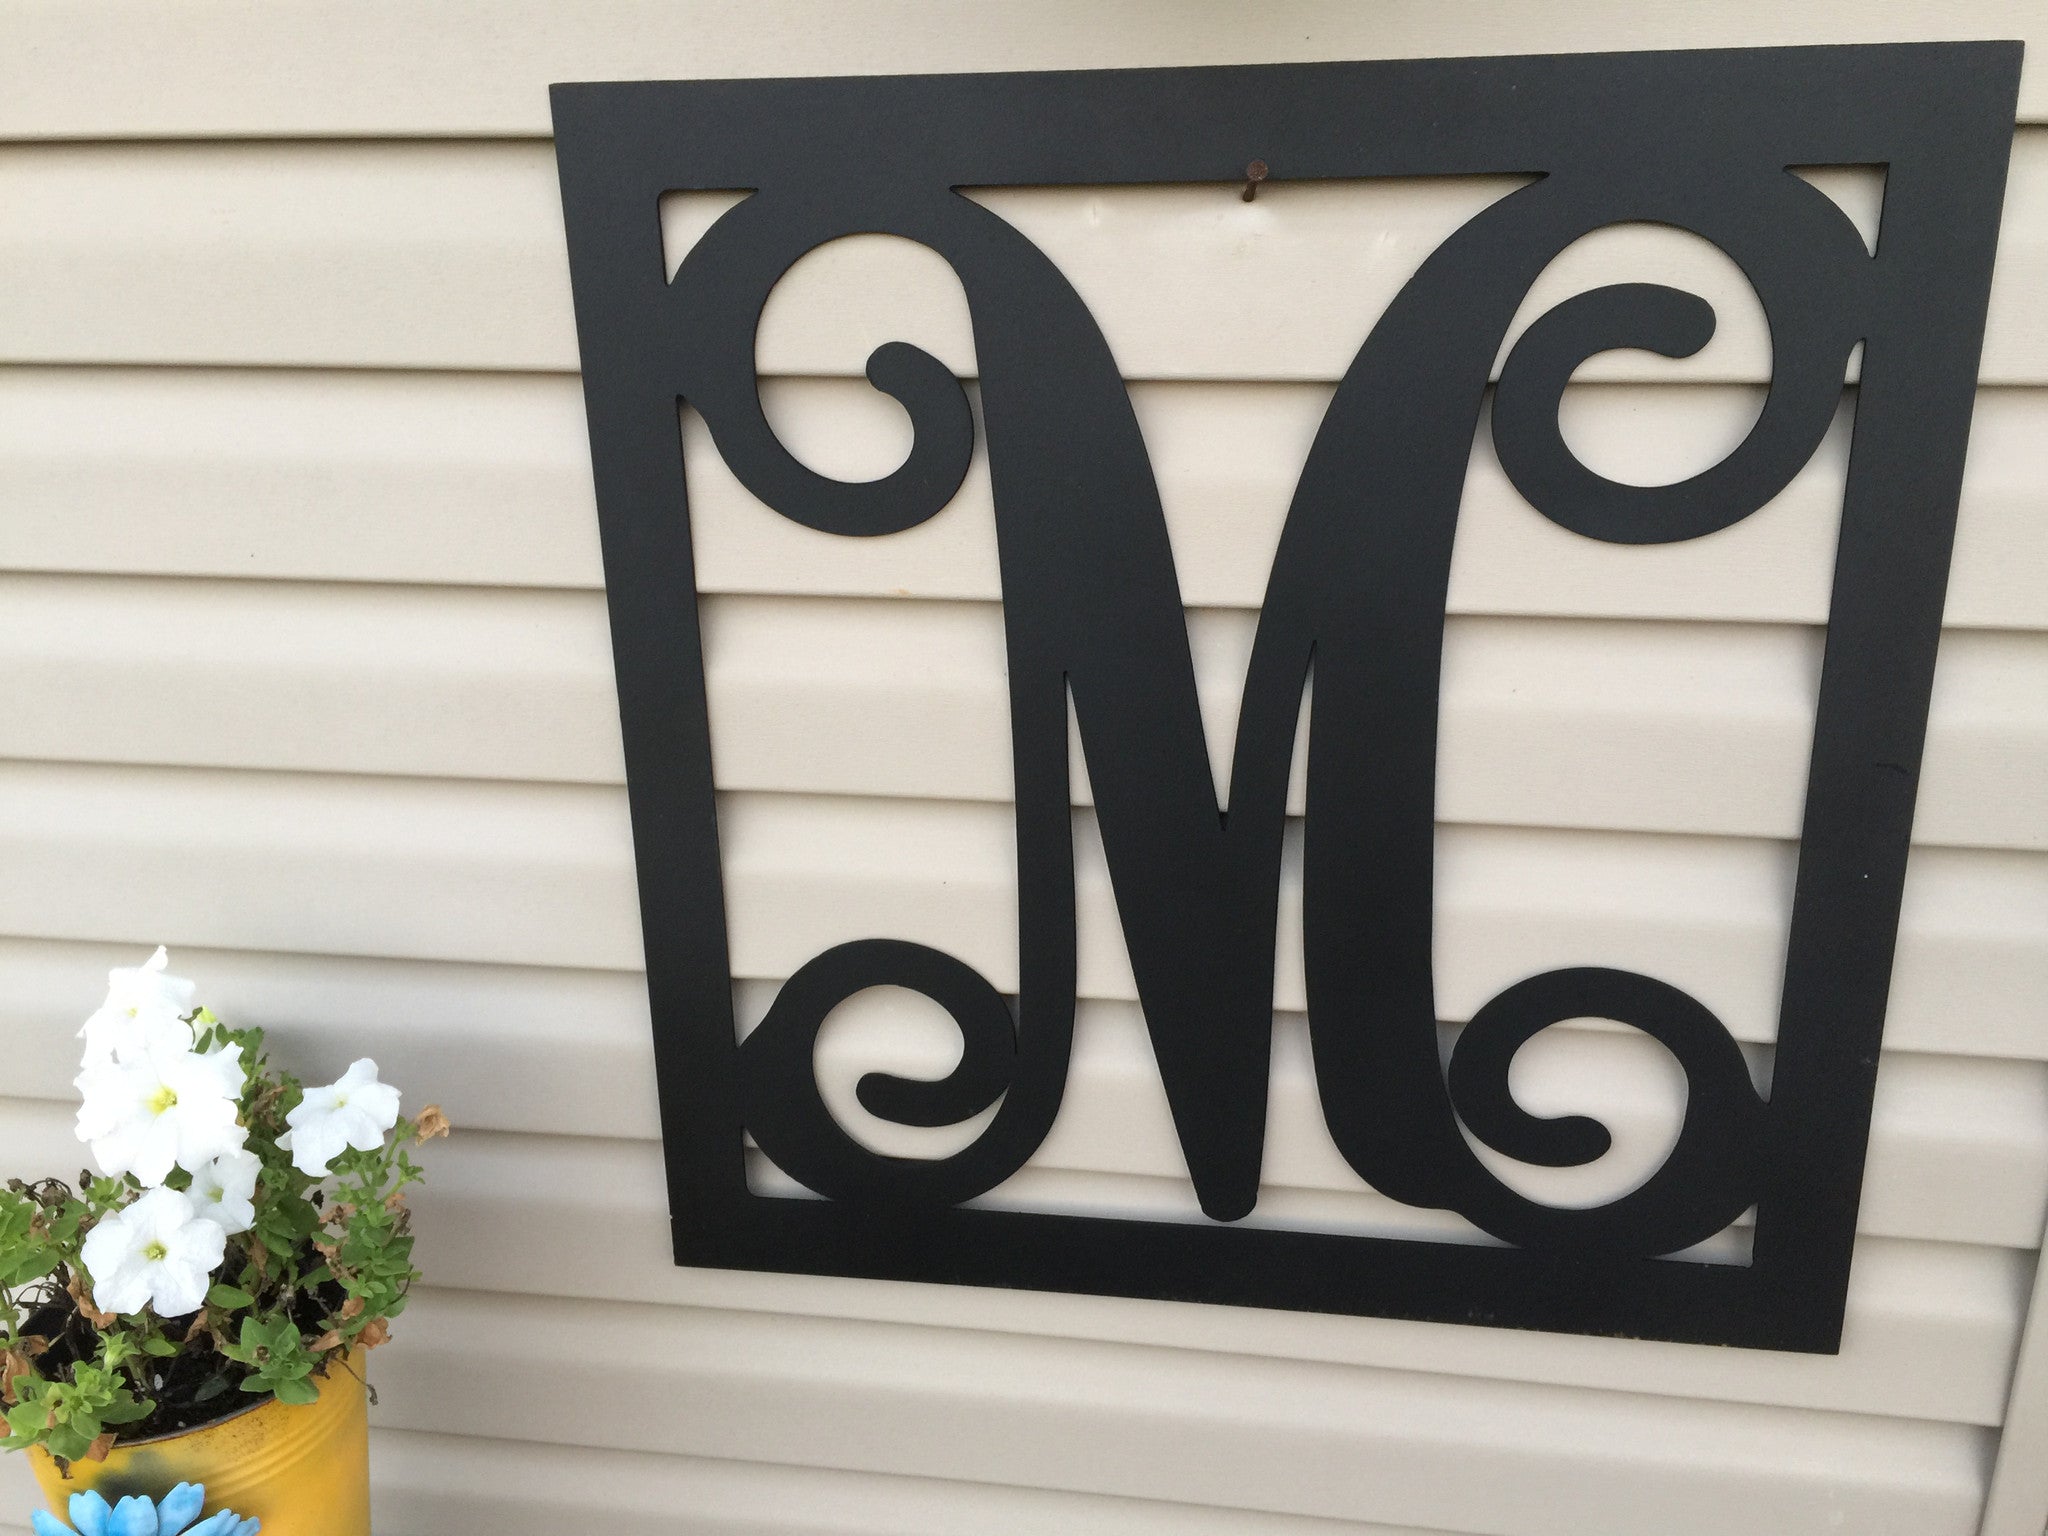 ''Metal Mogram Square with custom letter